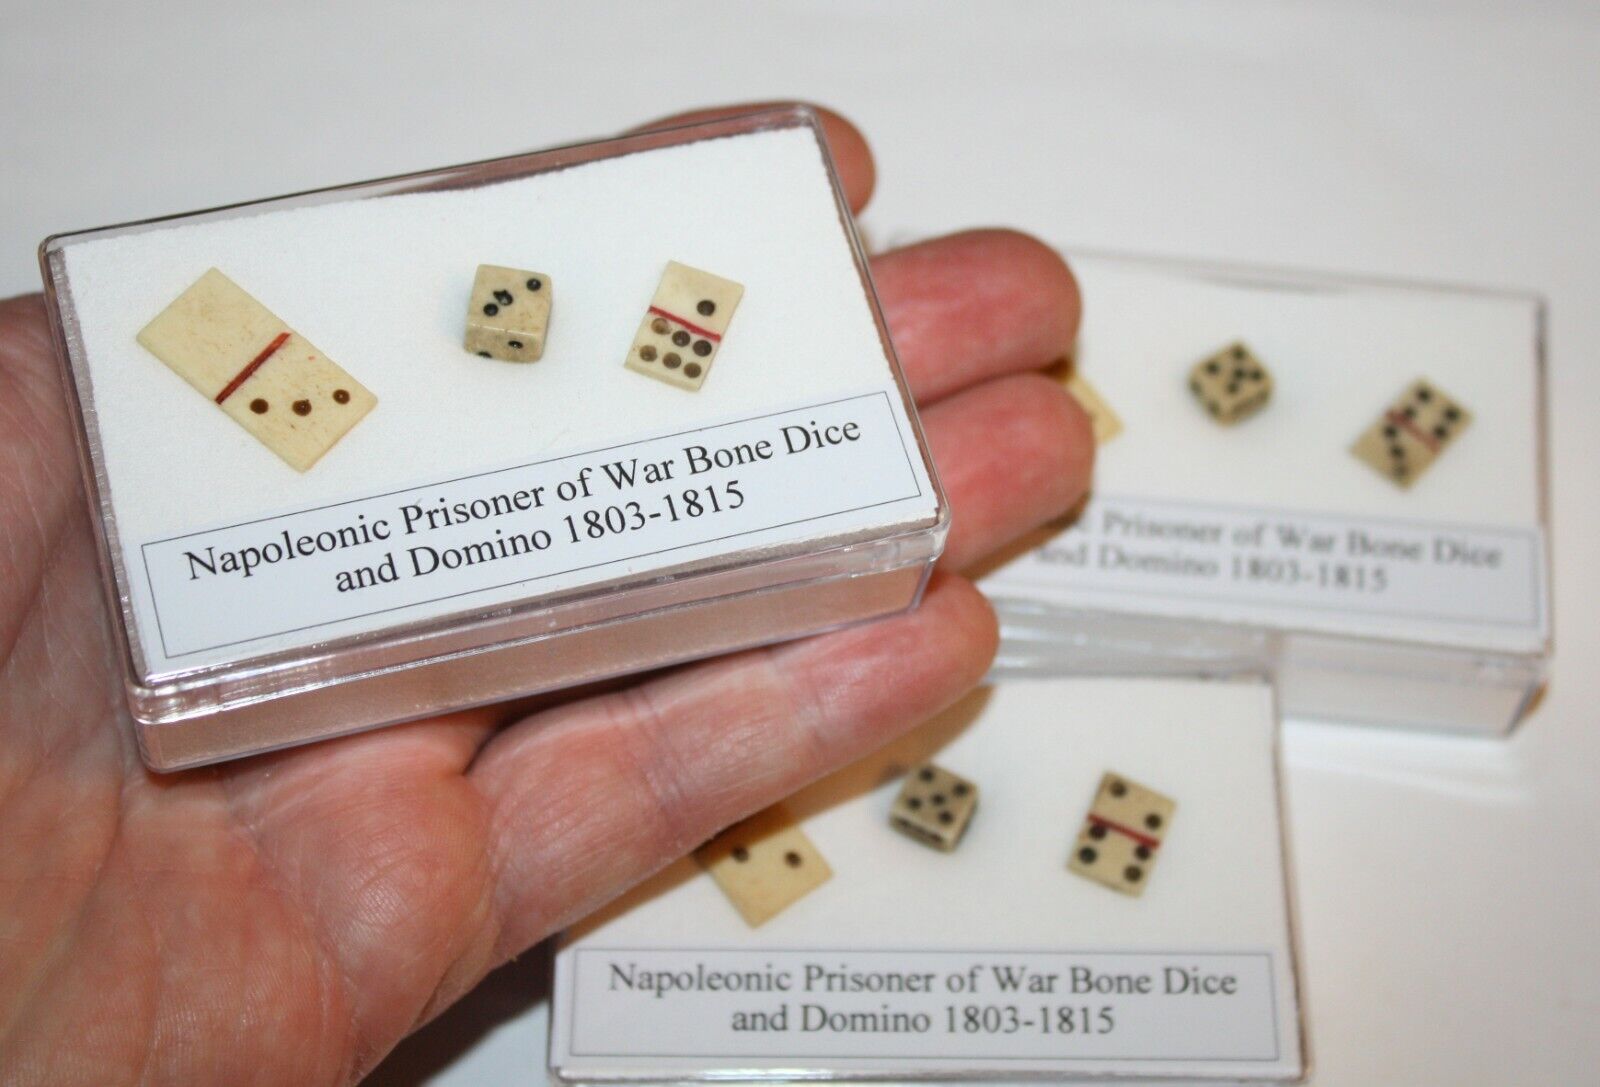 Napoleonic prisoner of war cow sheep dice and dominoes in display case 